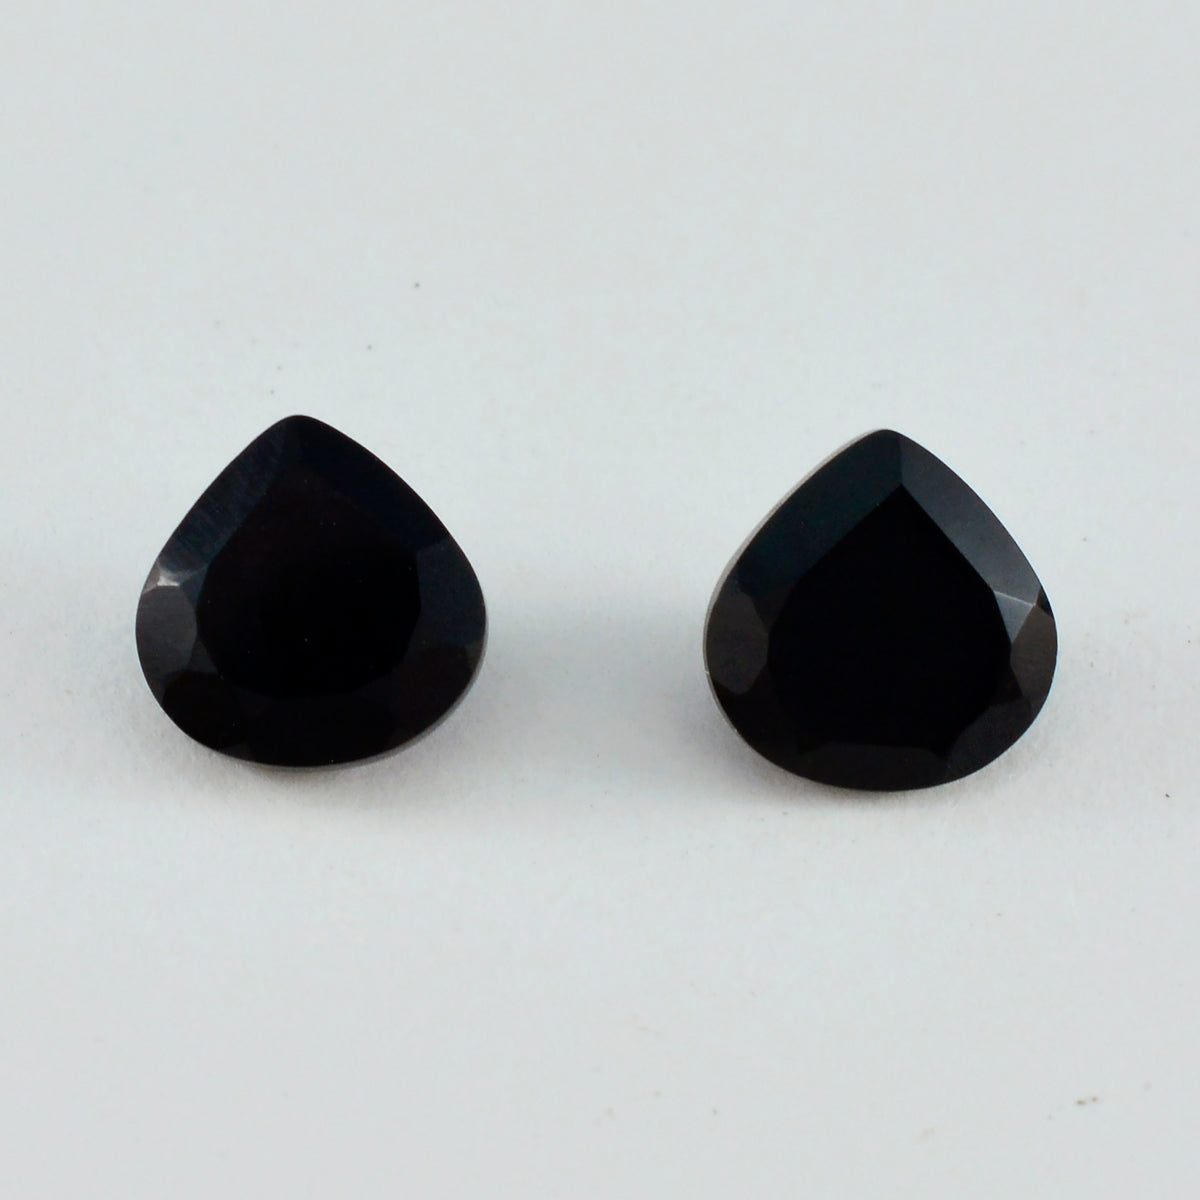 Riyogems 1PC Genuine Black Onyx Faceted 11x11 mm Heart Shape A+ Quality Loose Gems